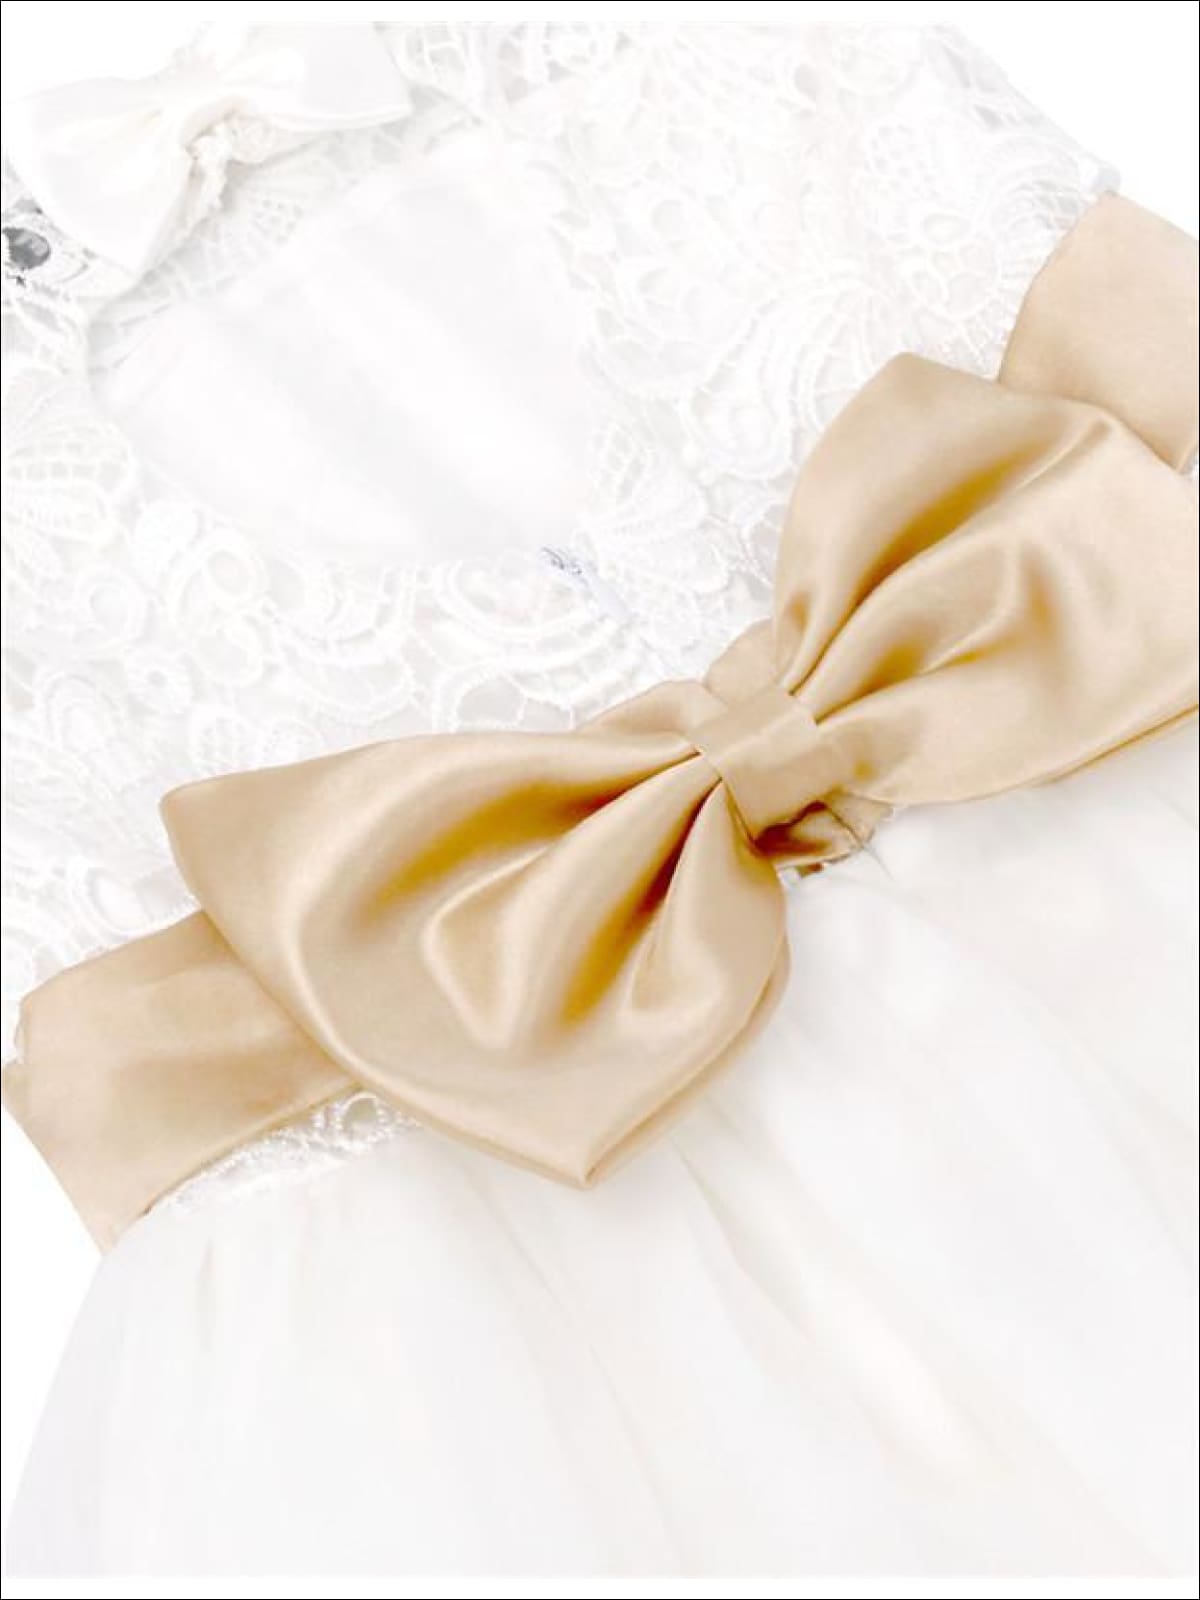 Girls Communion Dresses | White A-Line Lace Open Back Gold Bow Dress